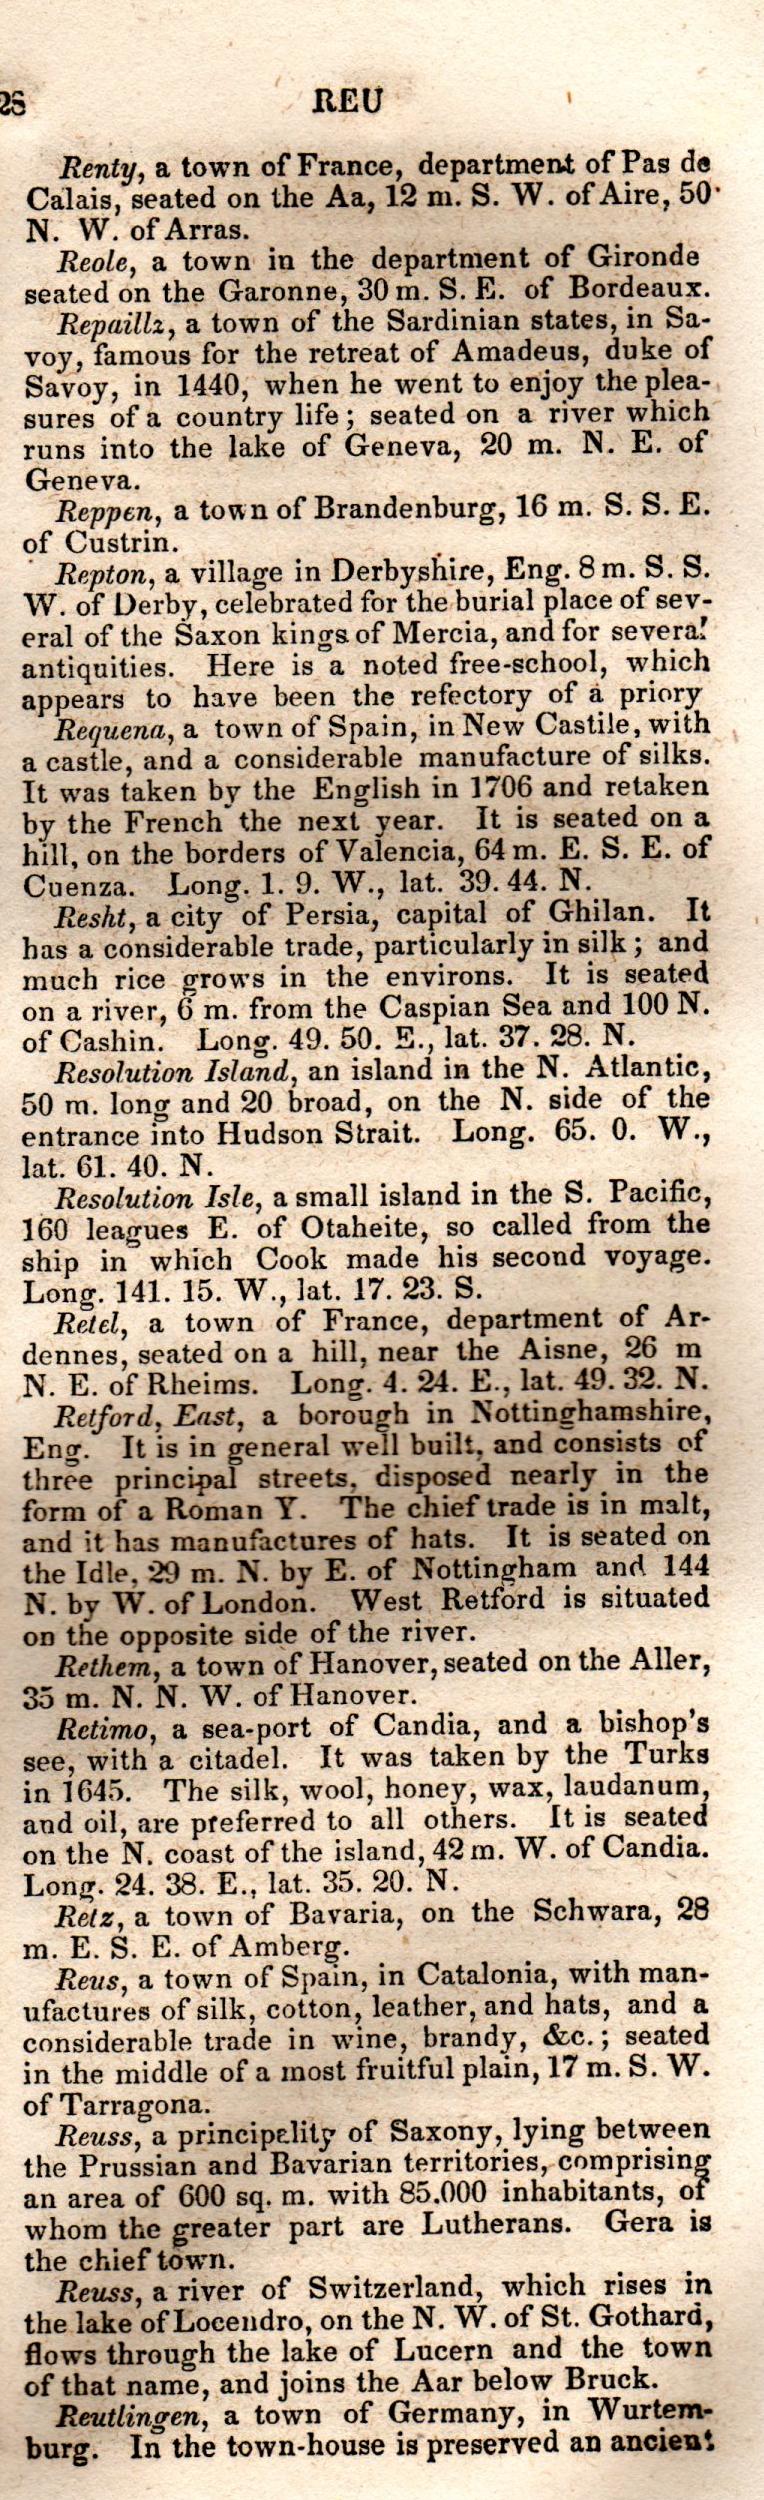 Brookes’ Universal Gazetteer (1850), Page 628 Right Column